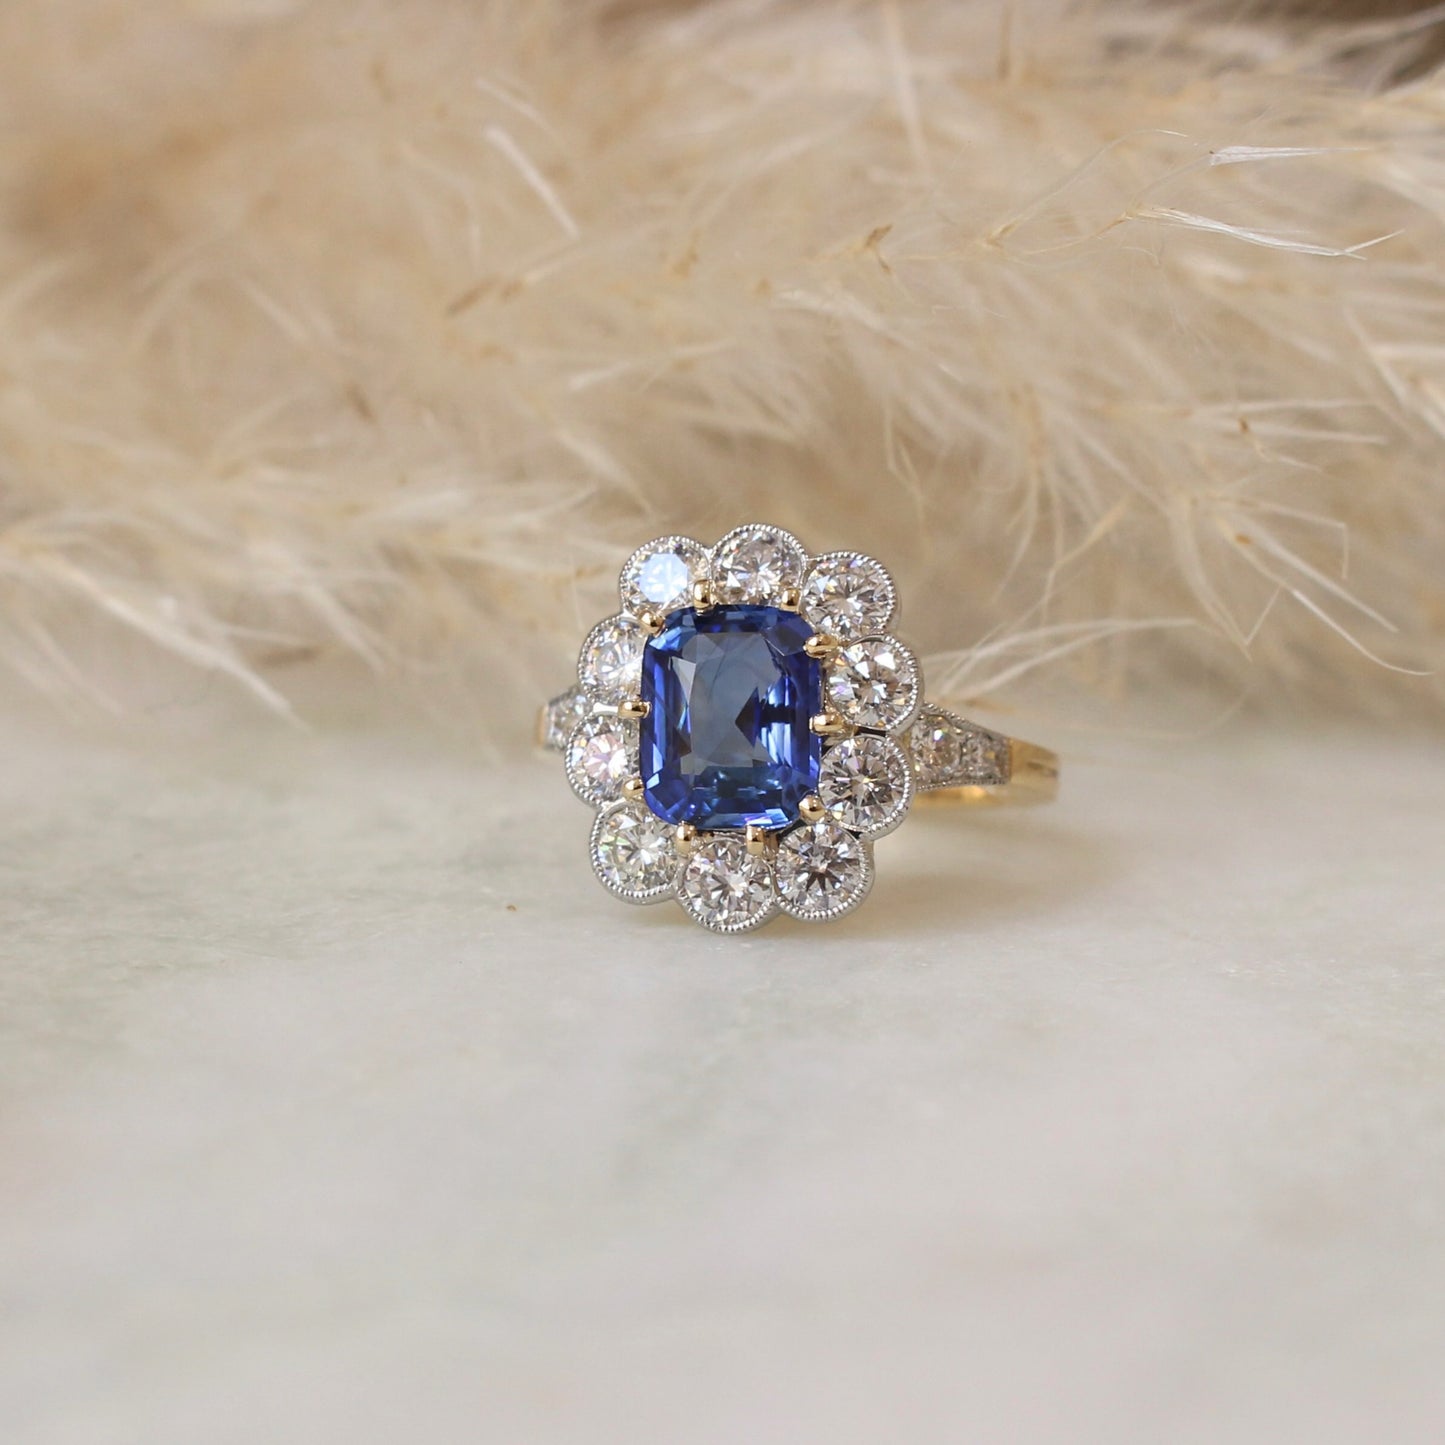 Bague de demande en mariage- saphir bleu entouré de diamants.jpeg